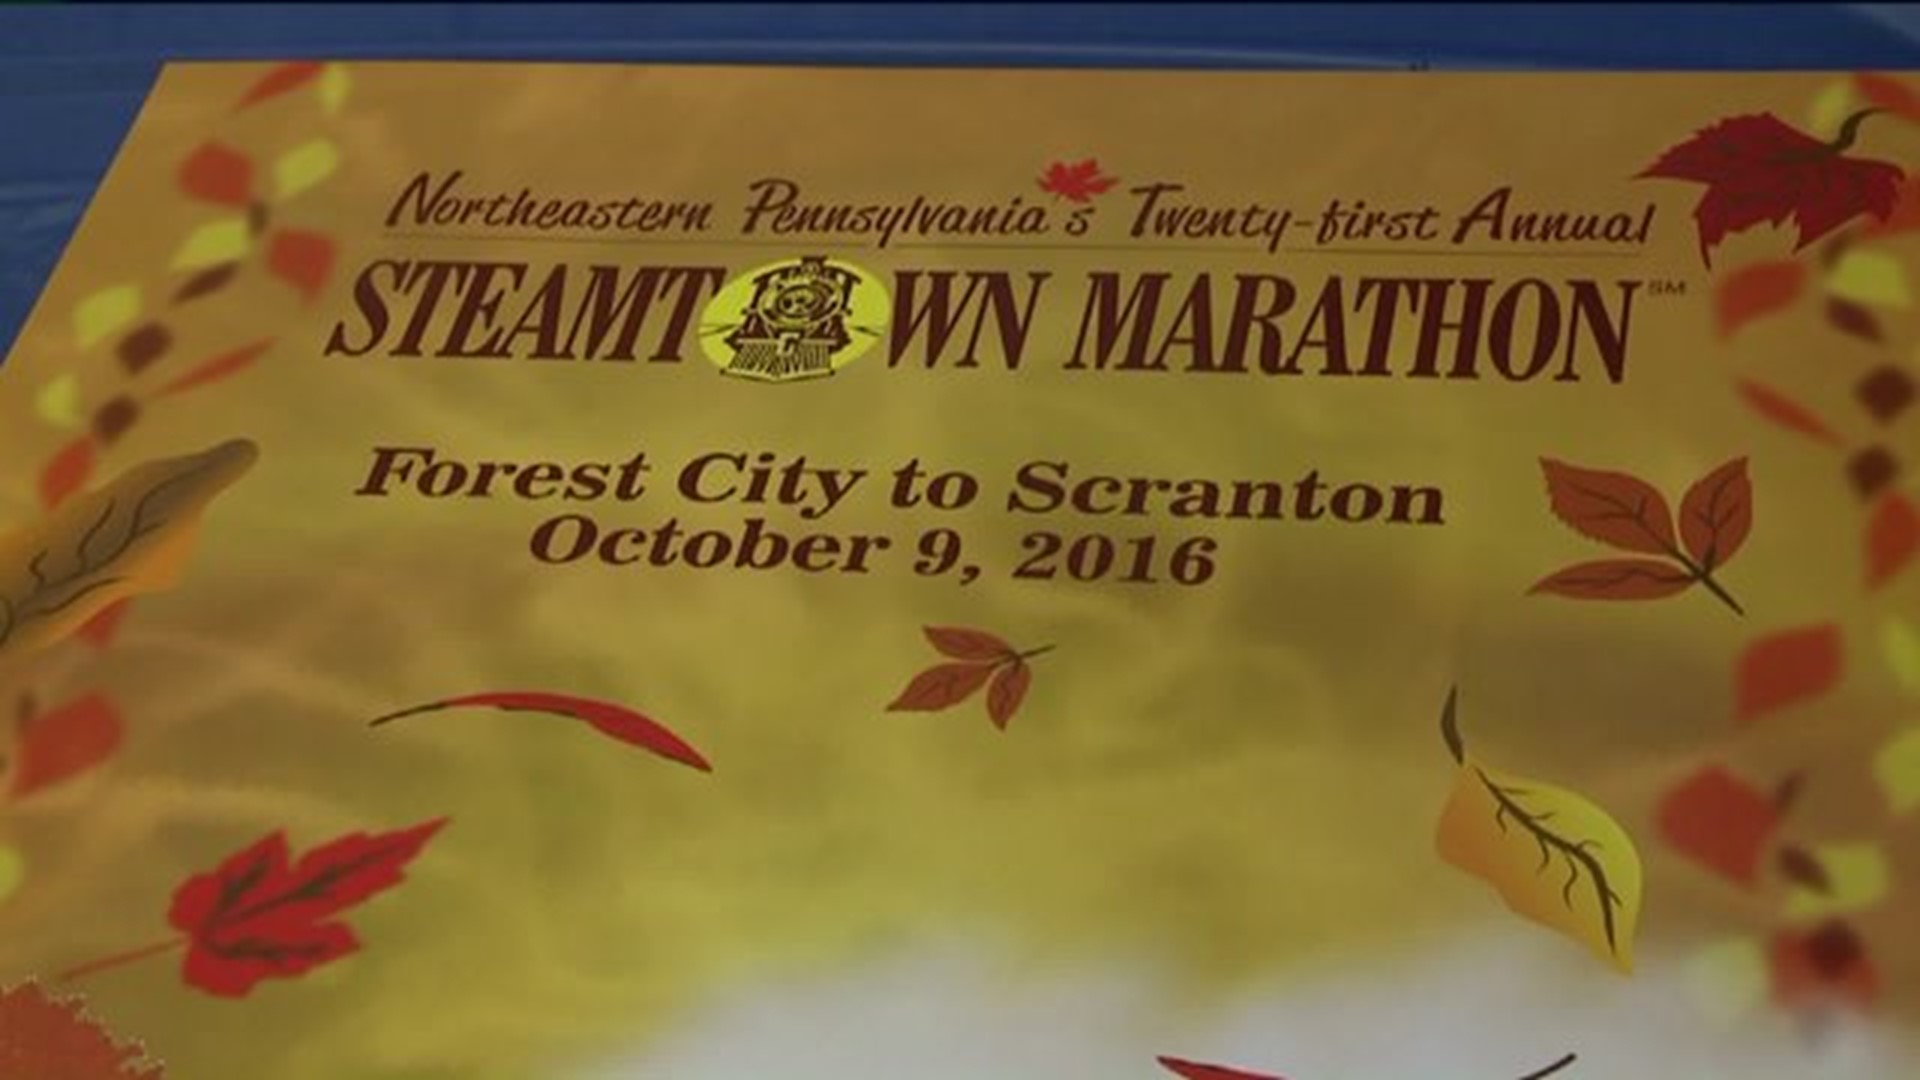 Steamtown Marathon Expo in Scranton